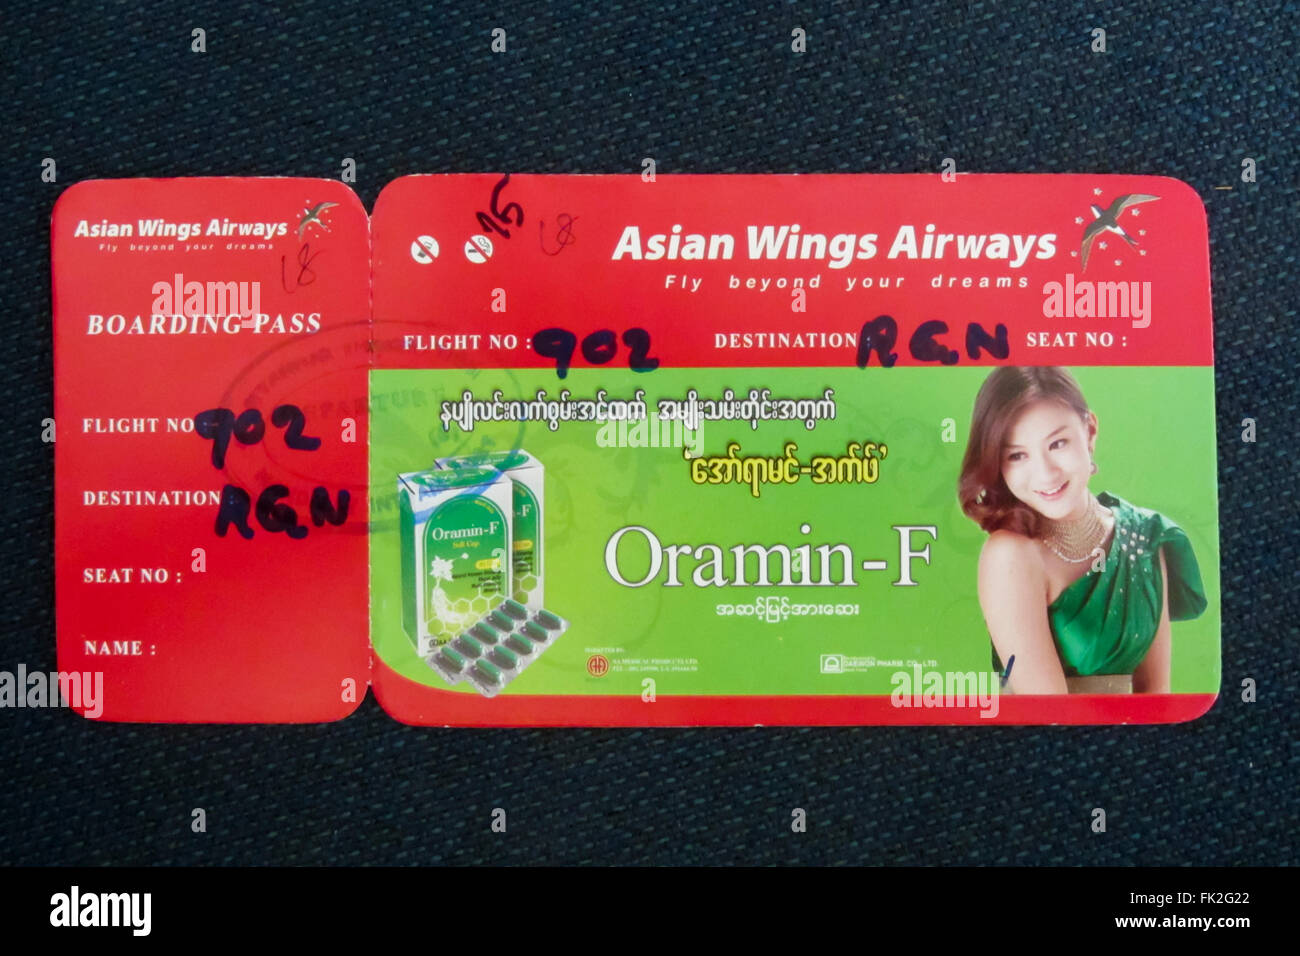 Hand-written boarding pass of Asian Wings Airways in Myanmar (Burma). Stock Photo